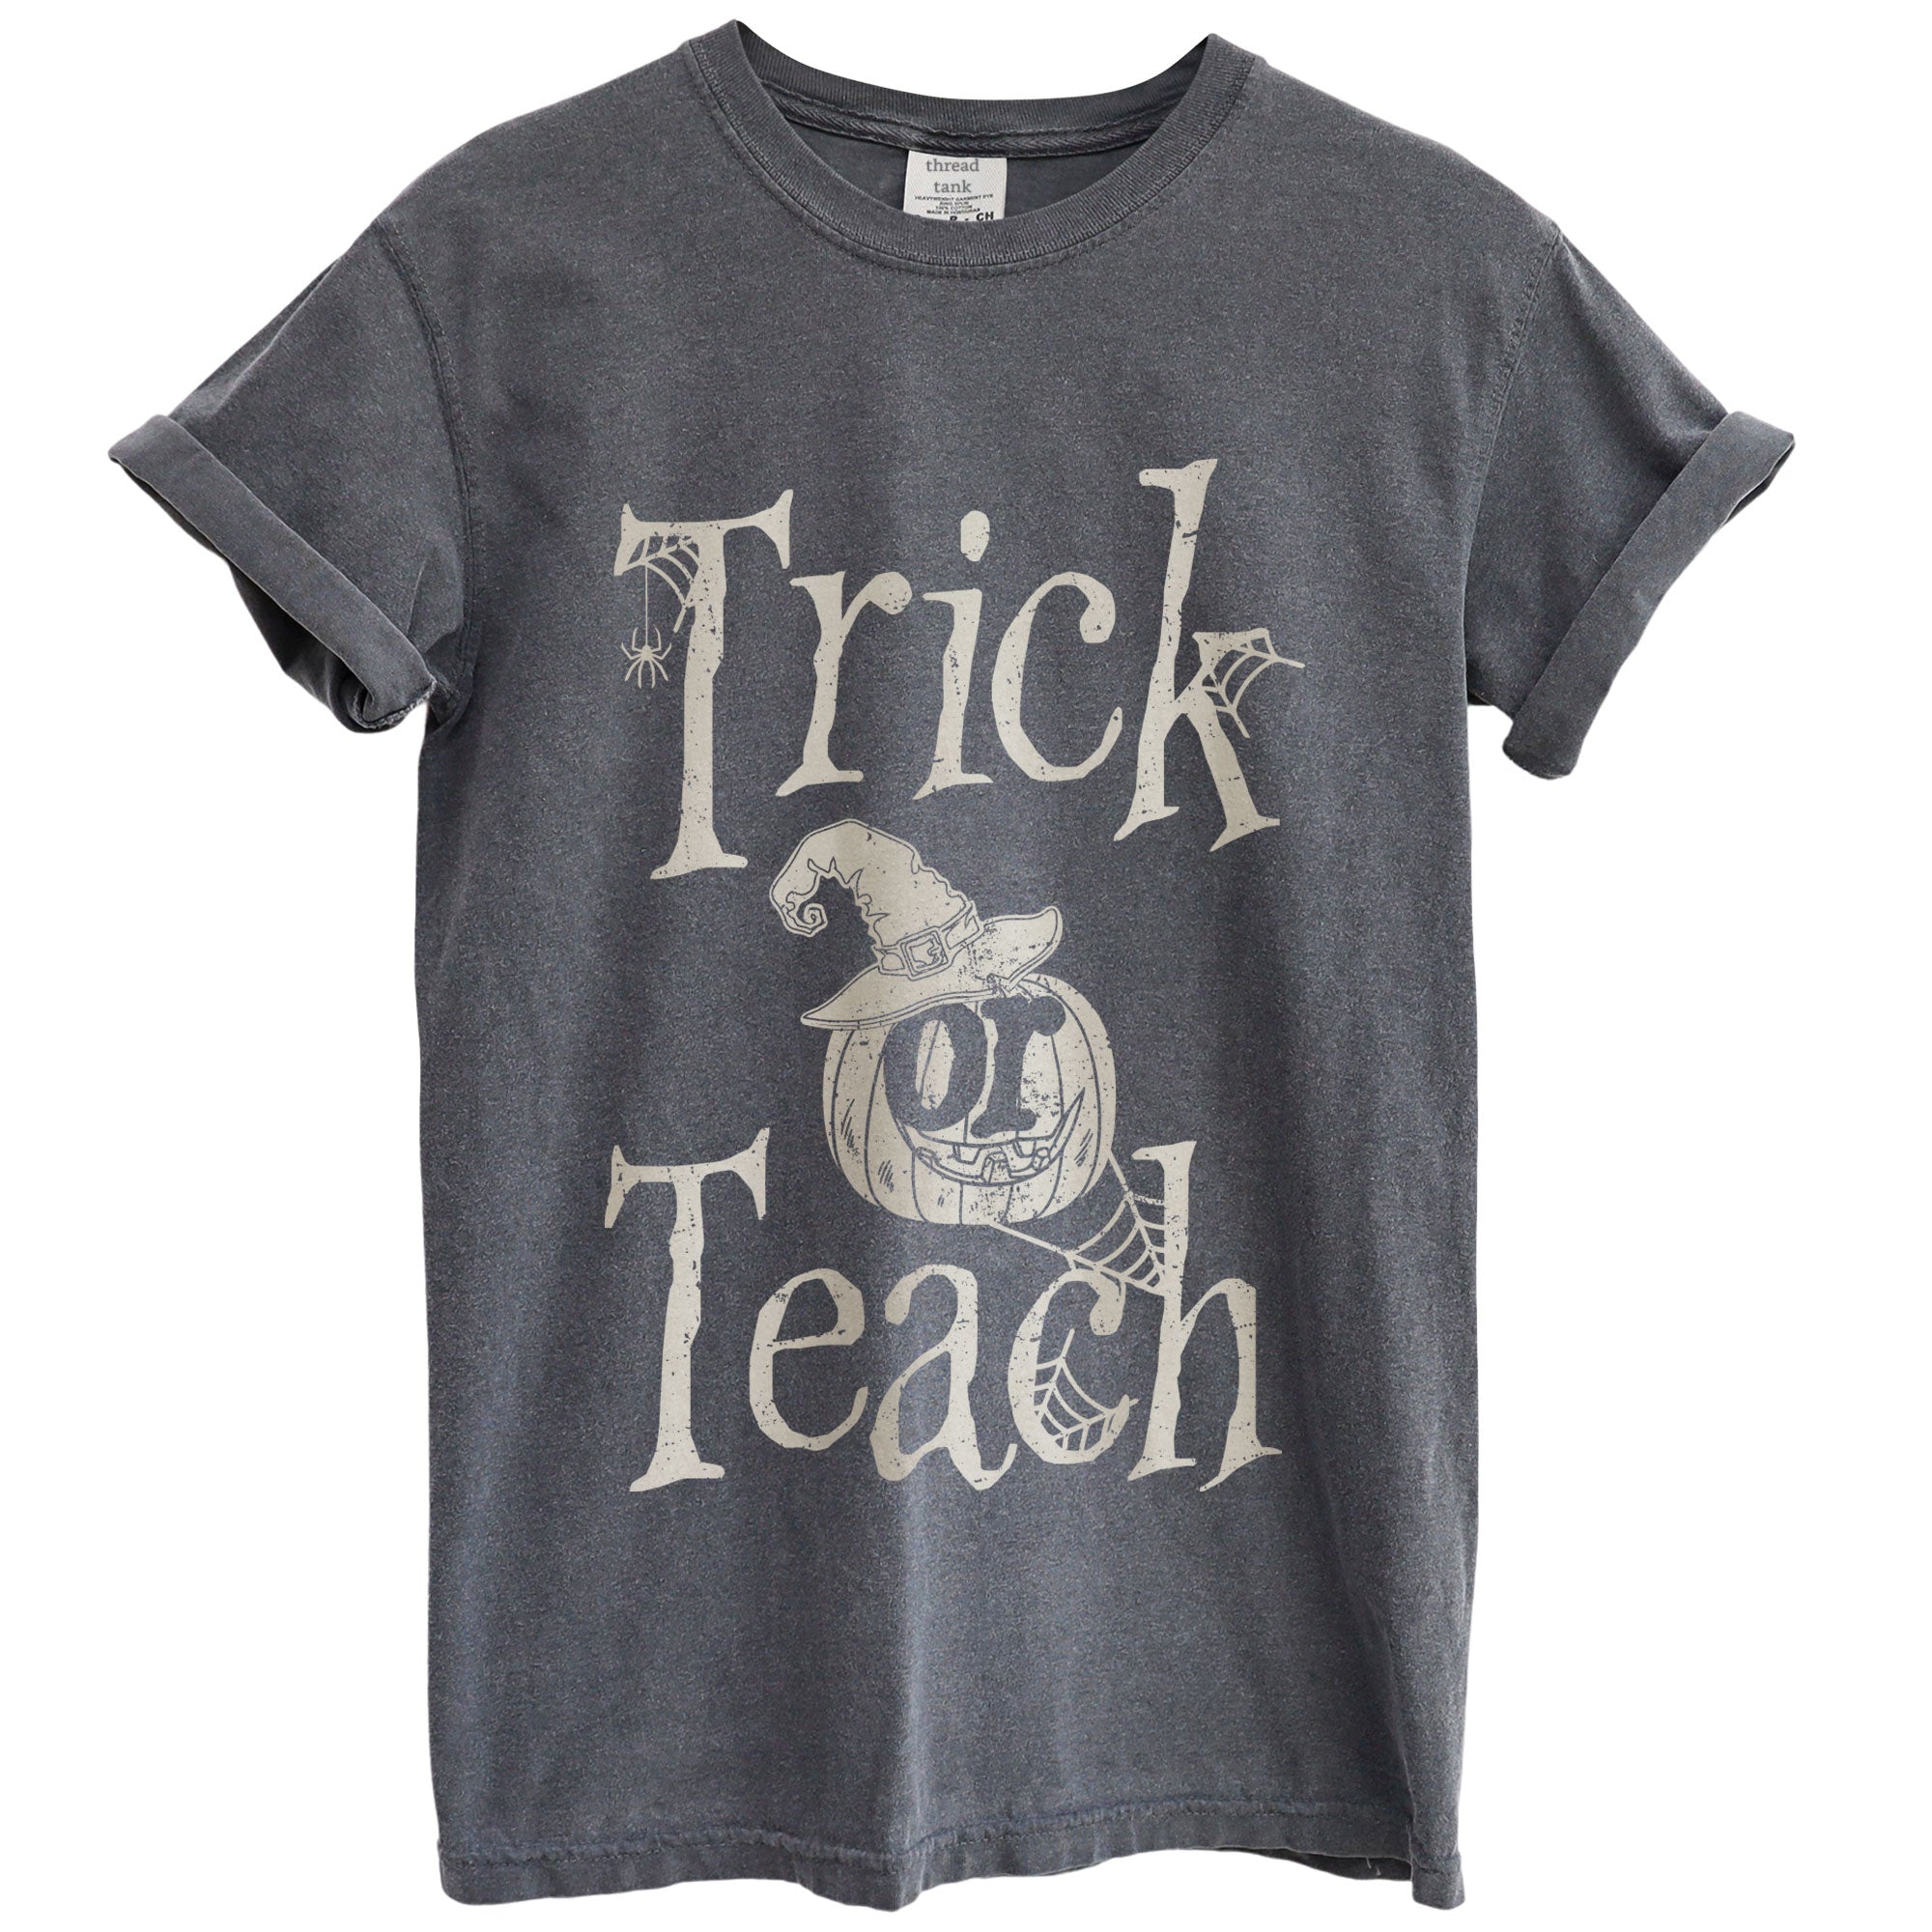 trick or teach oversized garment dyed shirt